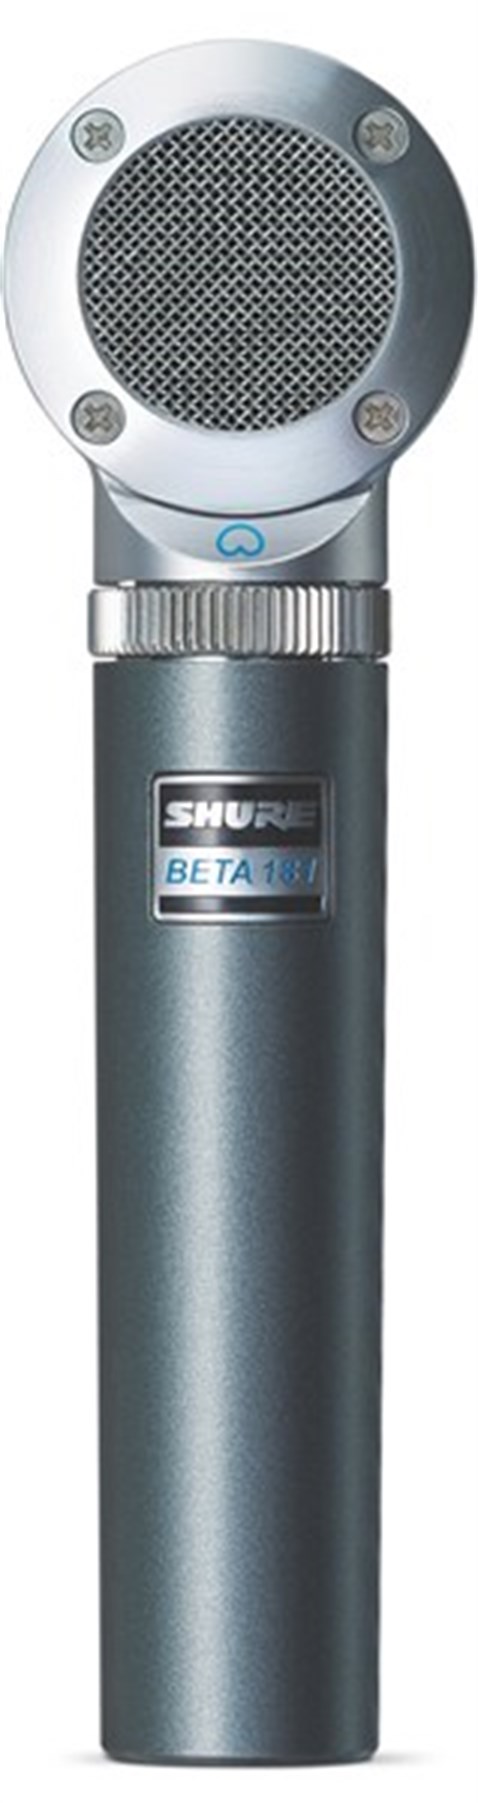 Shure Beta 181/S Süper-Polar Pattern Kapsül Enstruman Mikrofonu